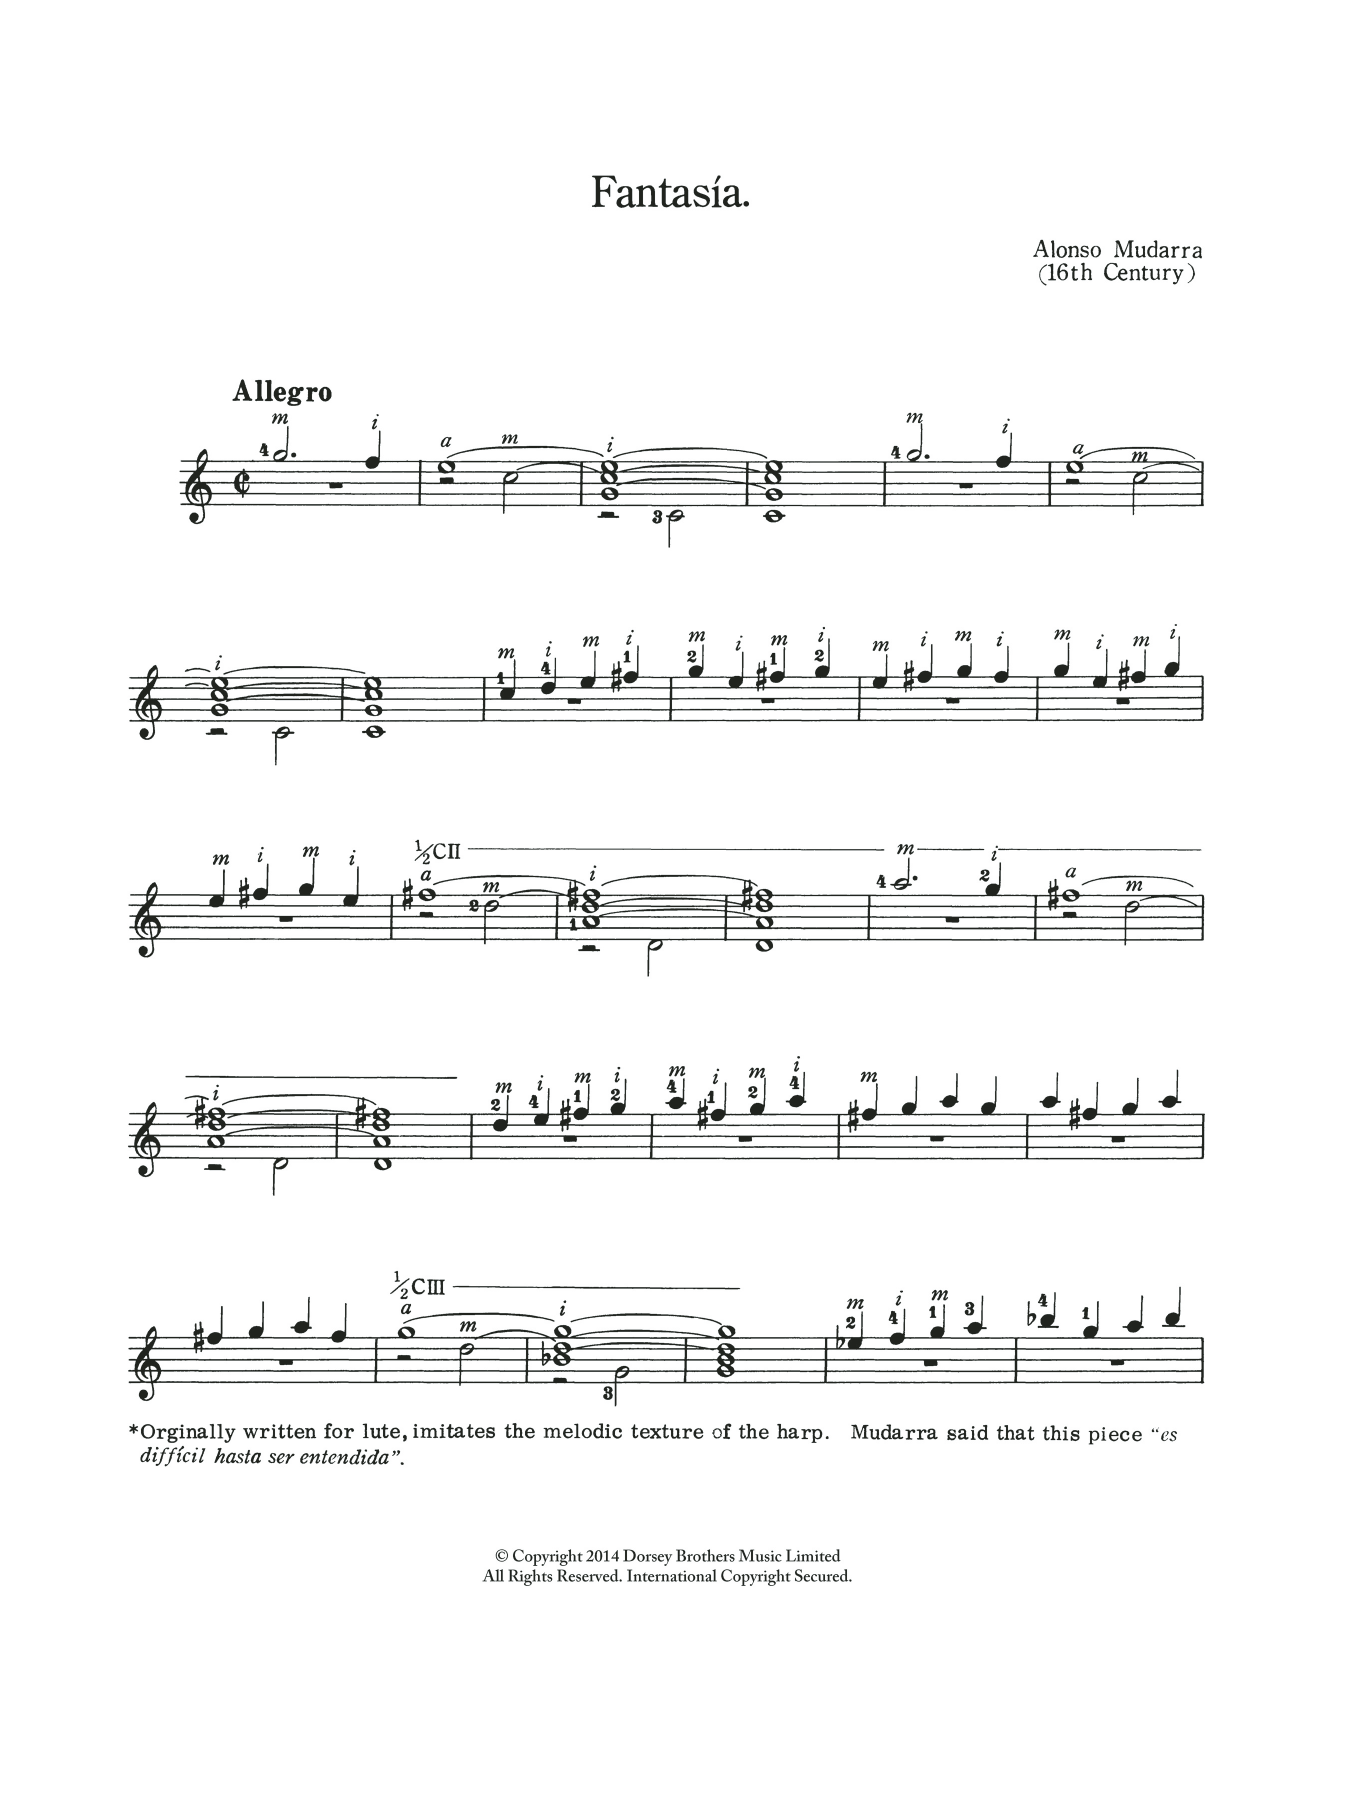 Alonso De Mudarra Fantasia Sheet Music Notes & Chords for Guitar - Download or Print PDF